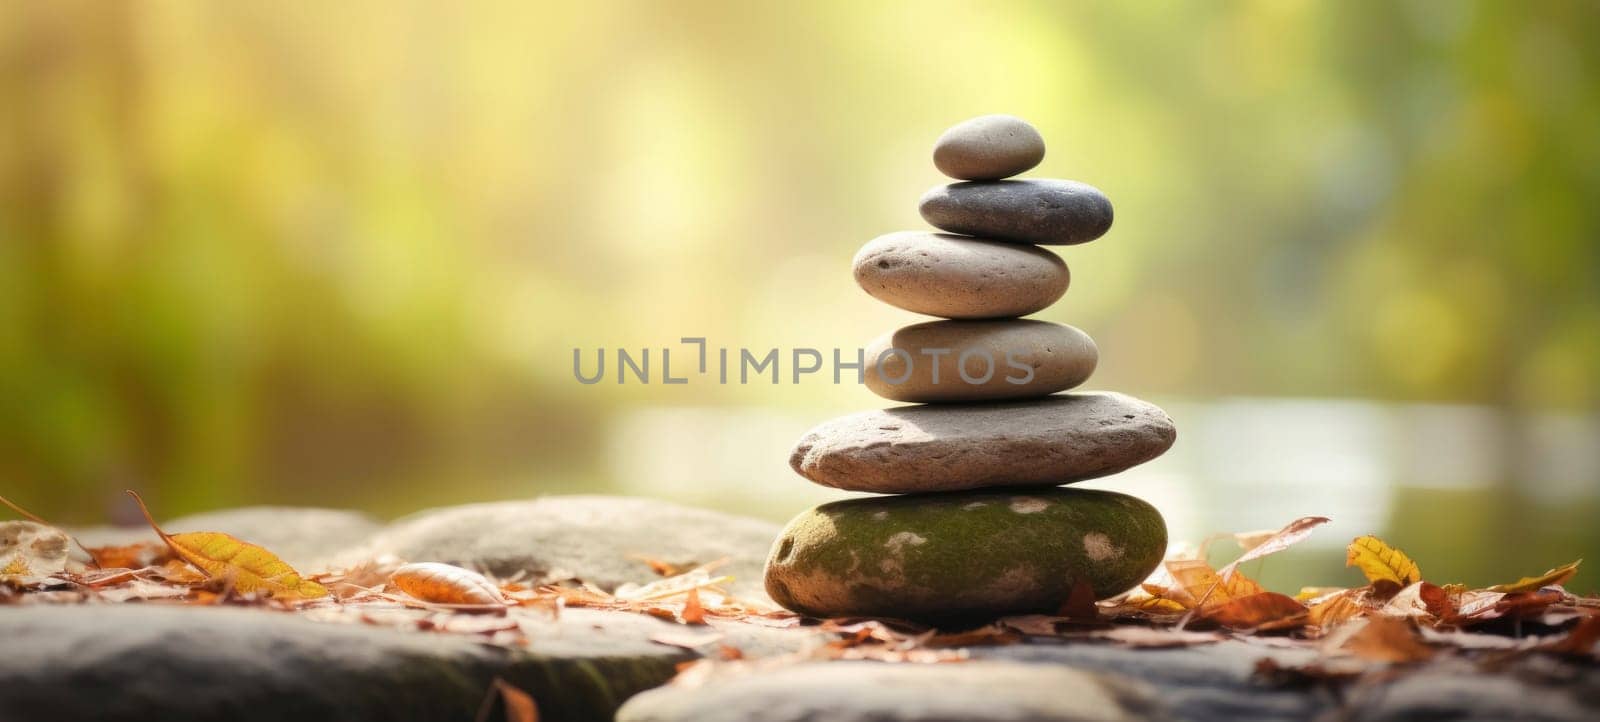 Balanced River Stones in Zen Harmony by andreyz